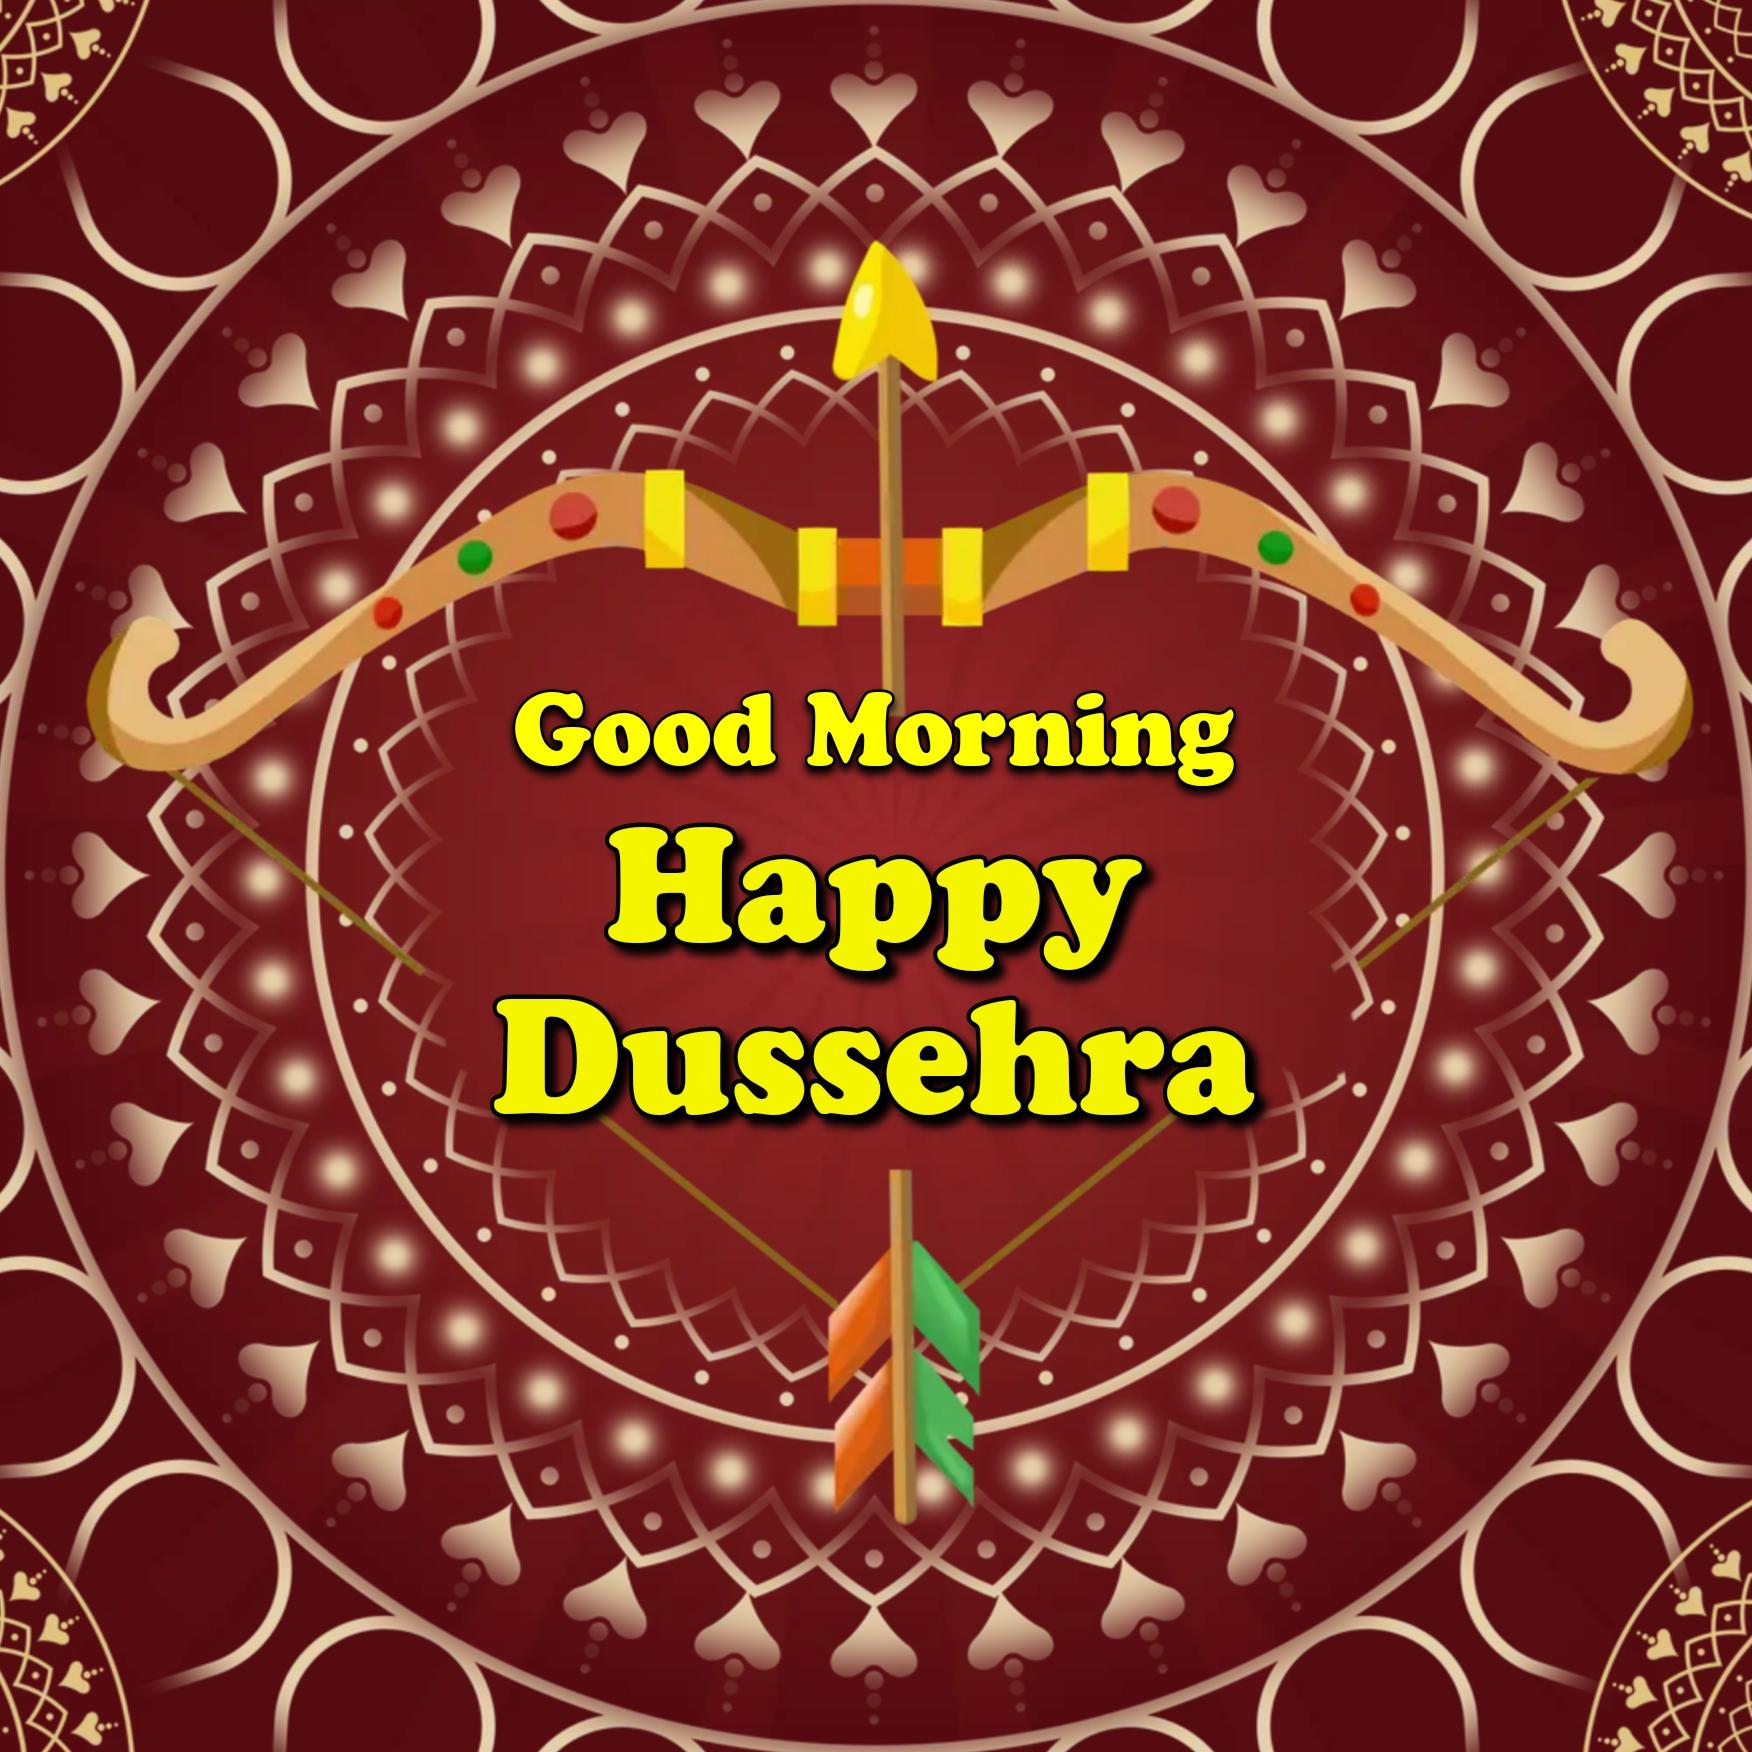 Good Morning Happy Dussehra Images